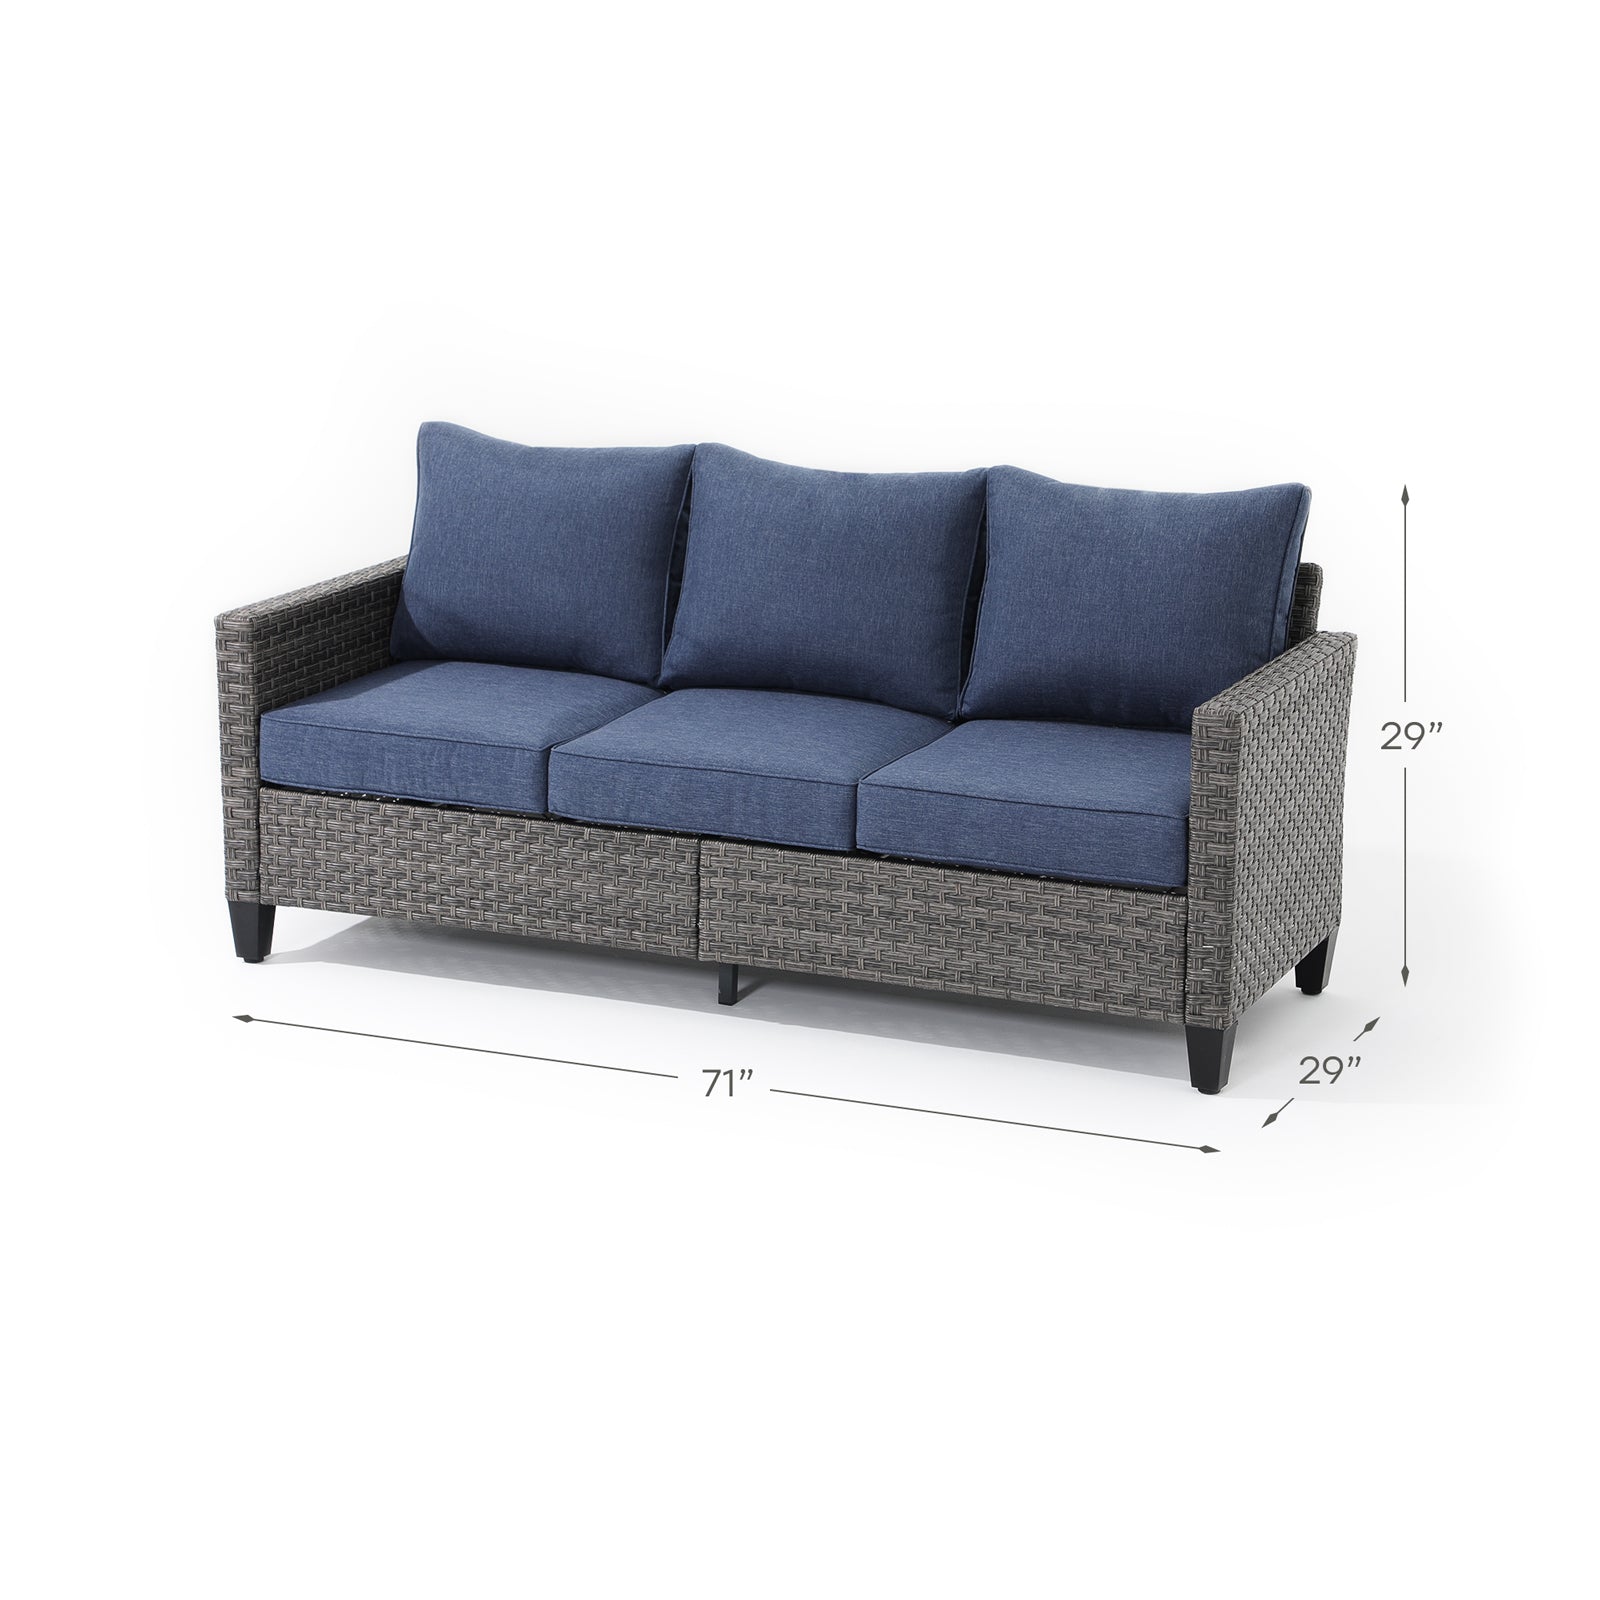 Ayia sofa  with rattan design, blue cushions, dimension information - Jardina Furniture#color_Navy Blue